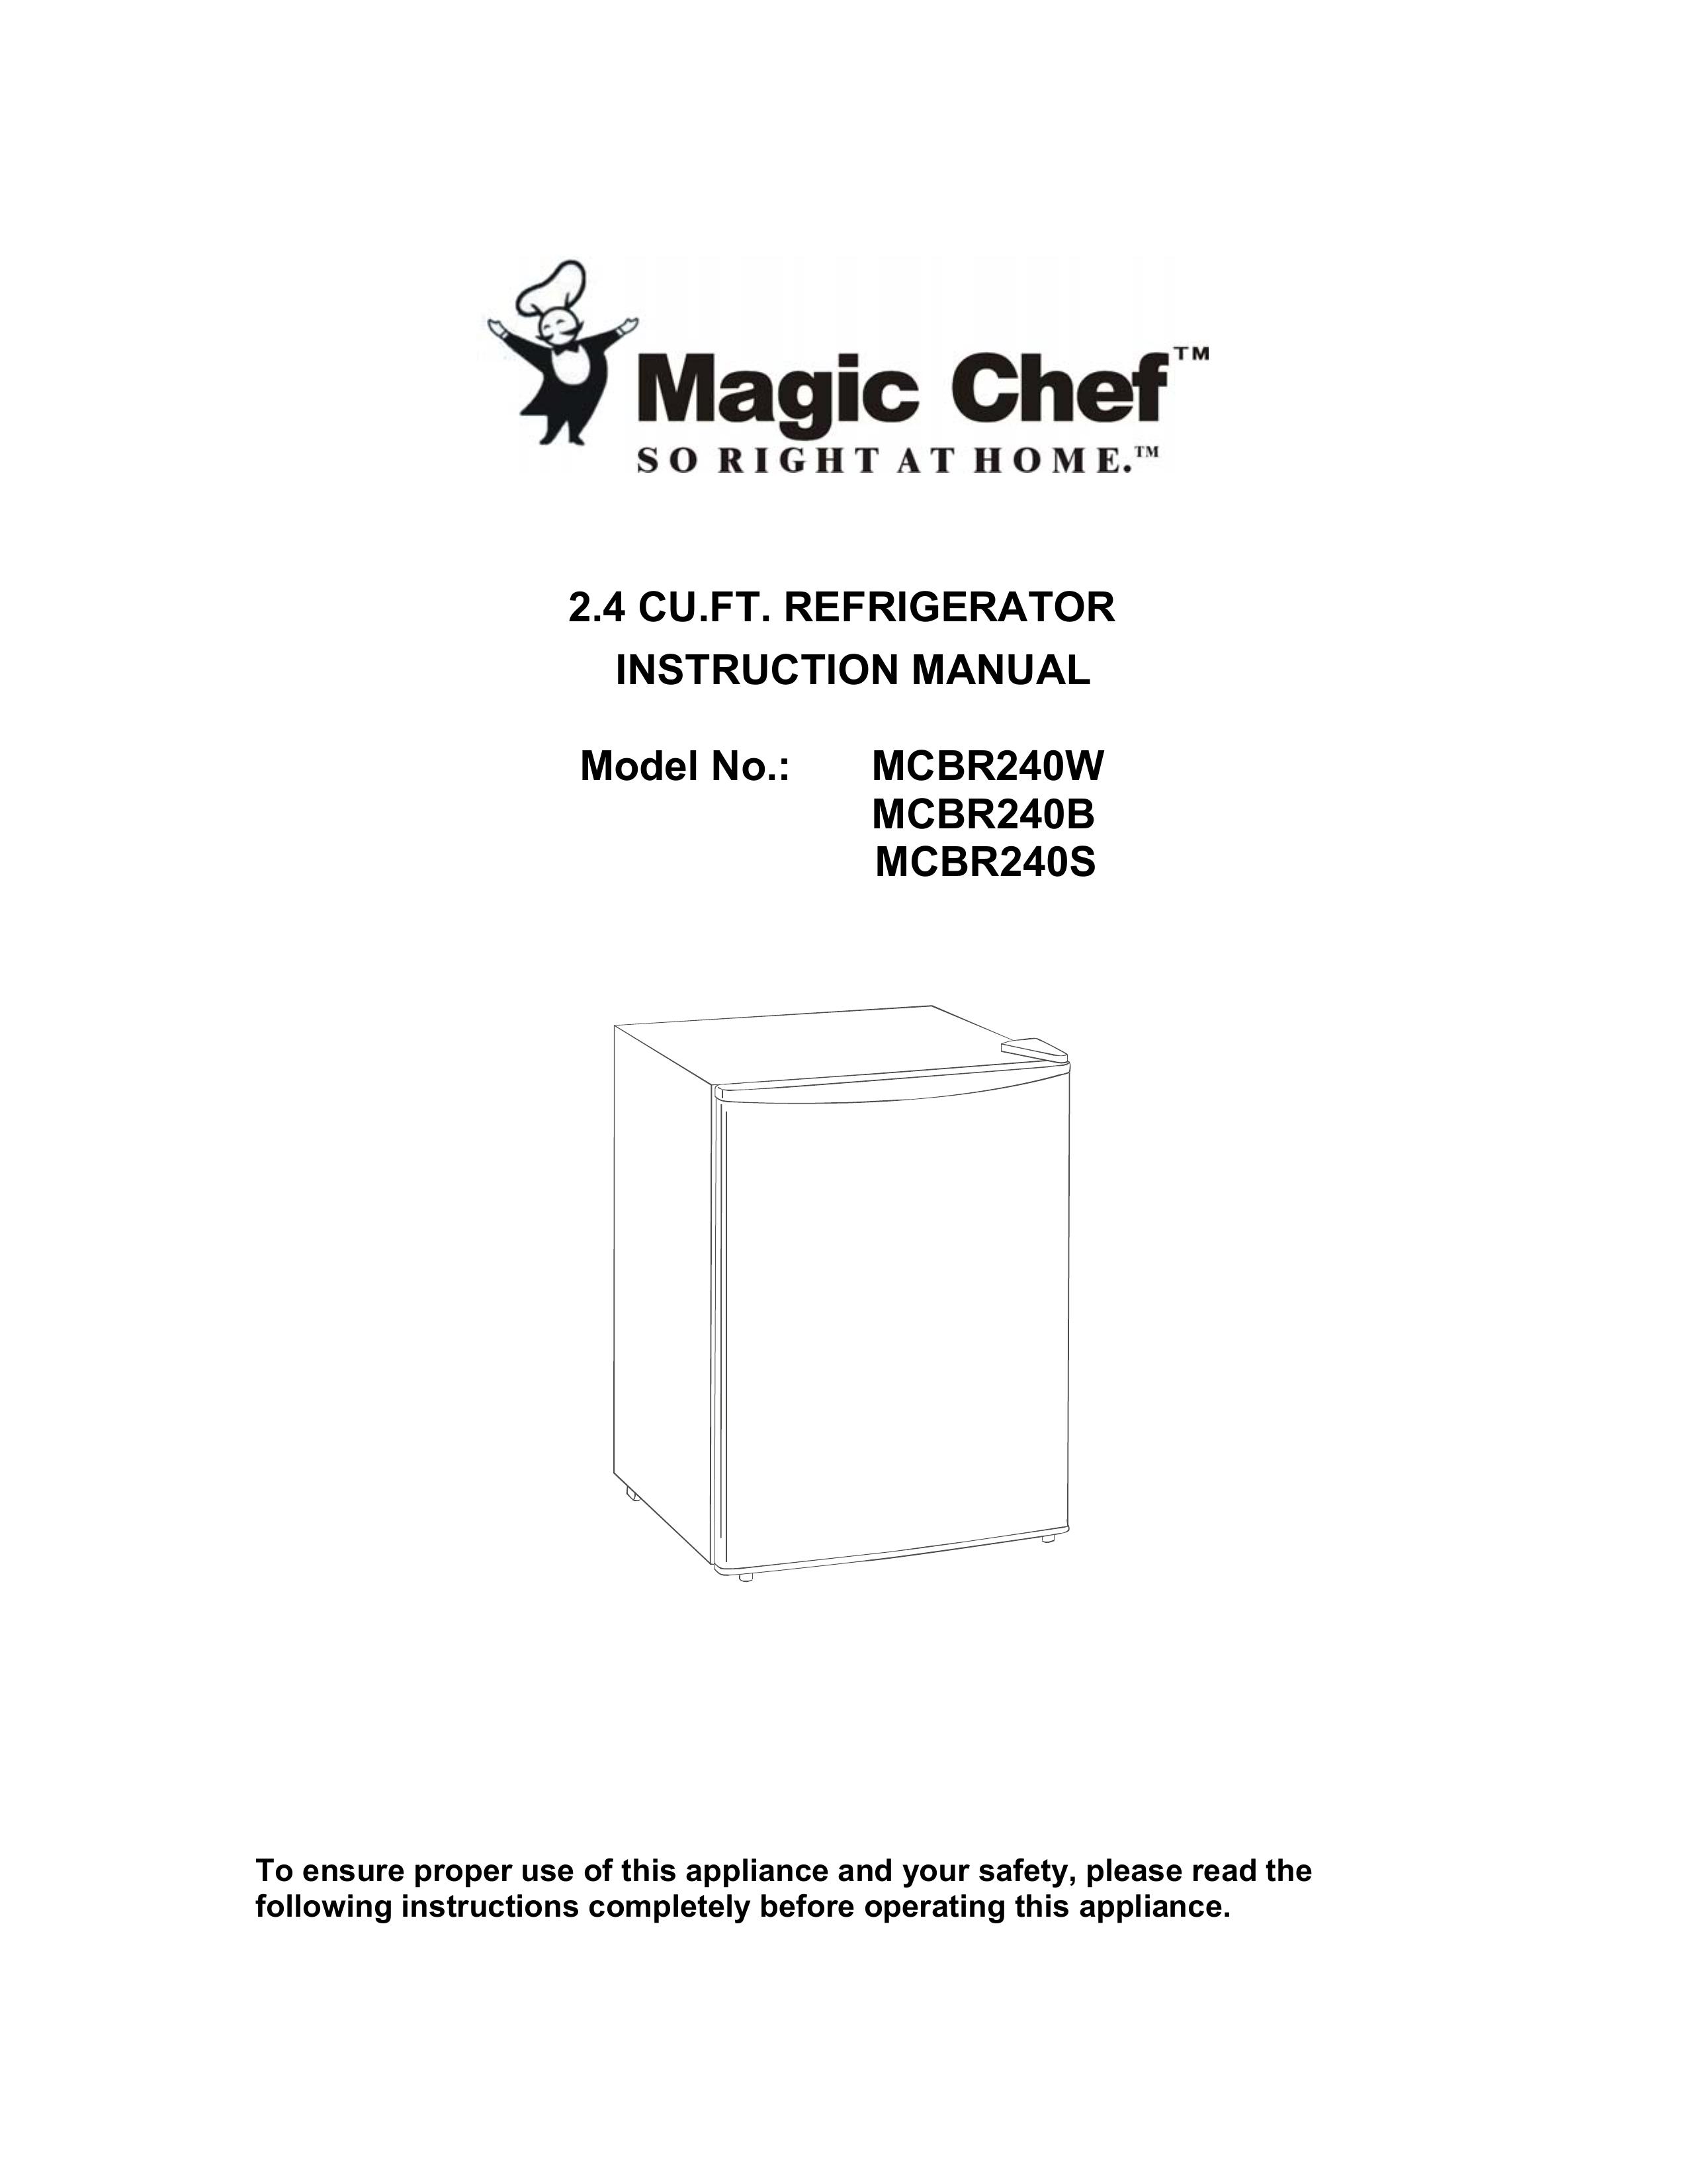 Magic Chef MCBR240B Refrigerator User Manual